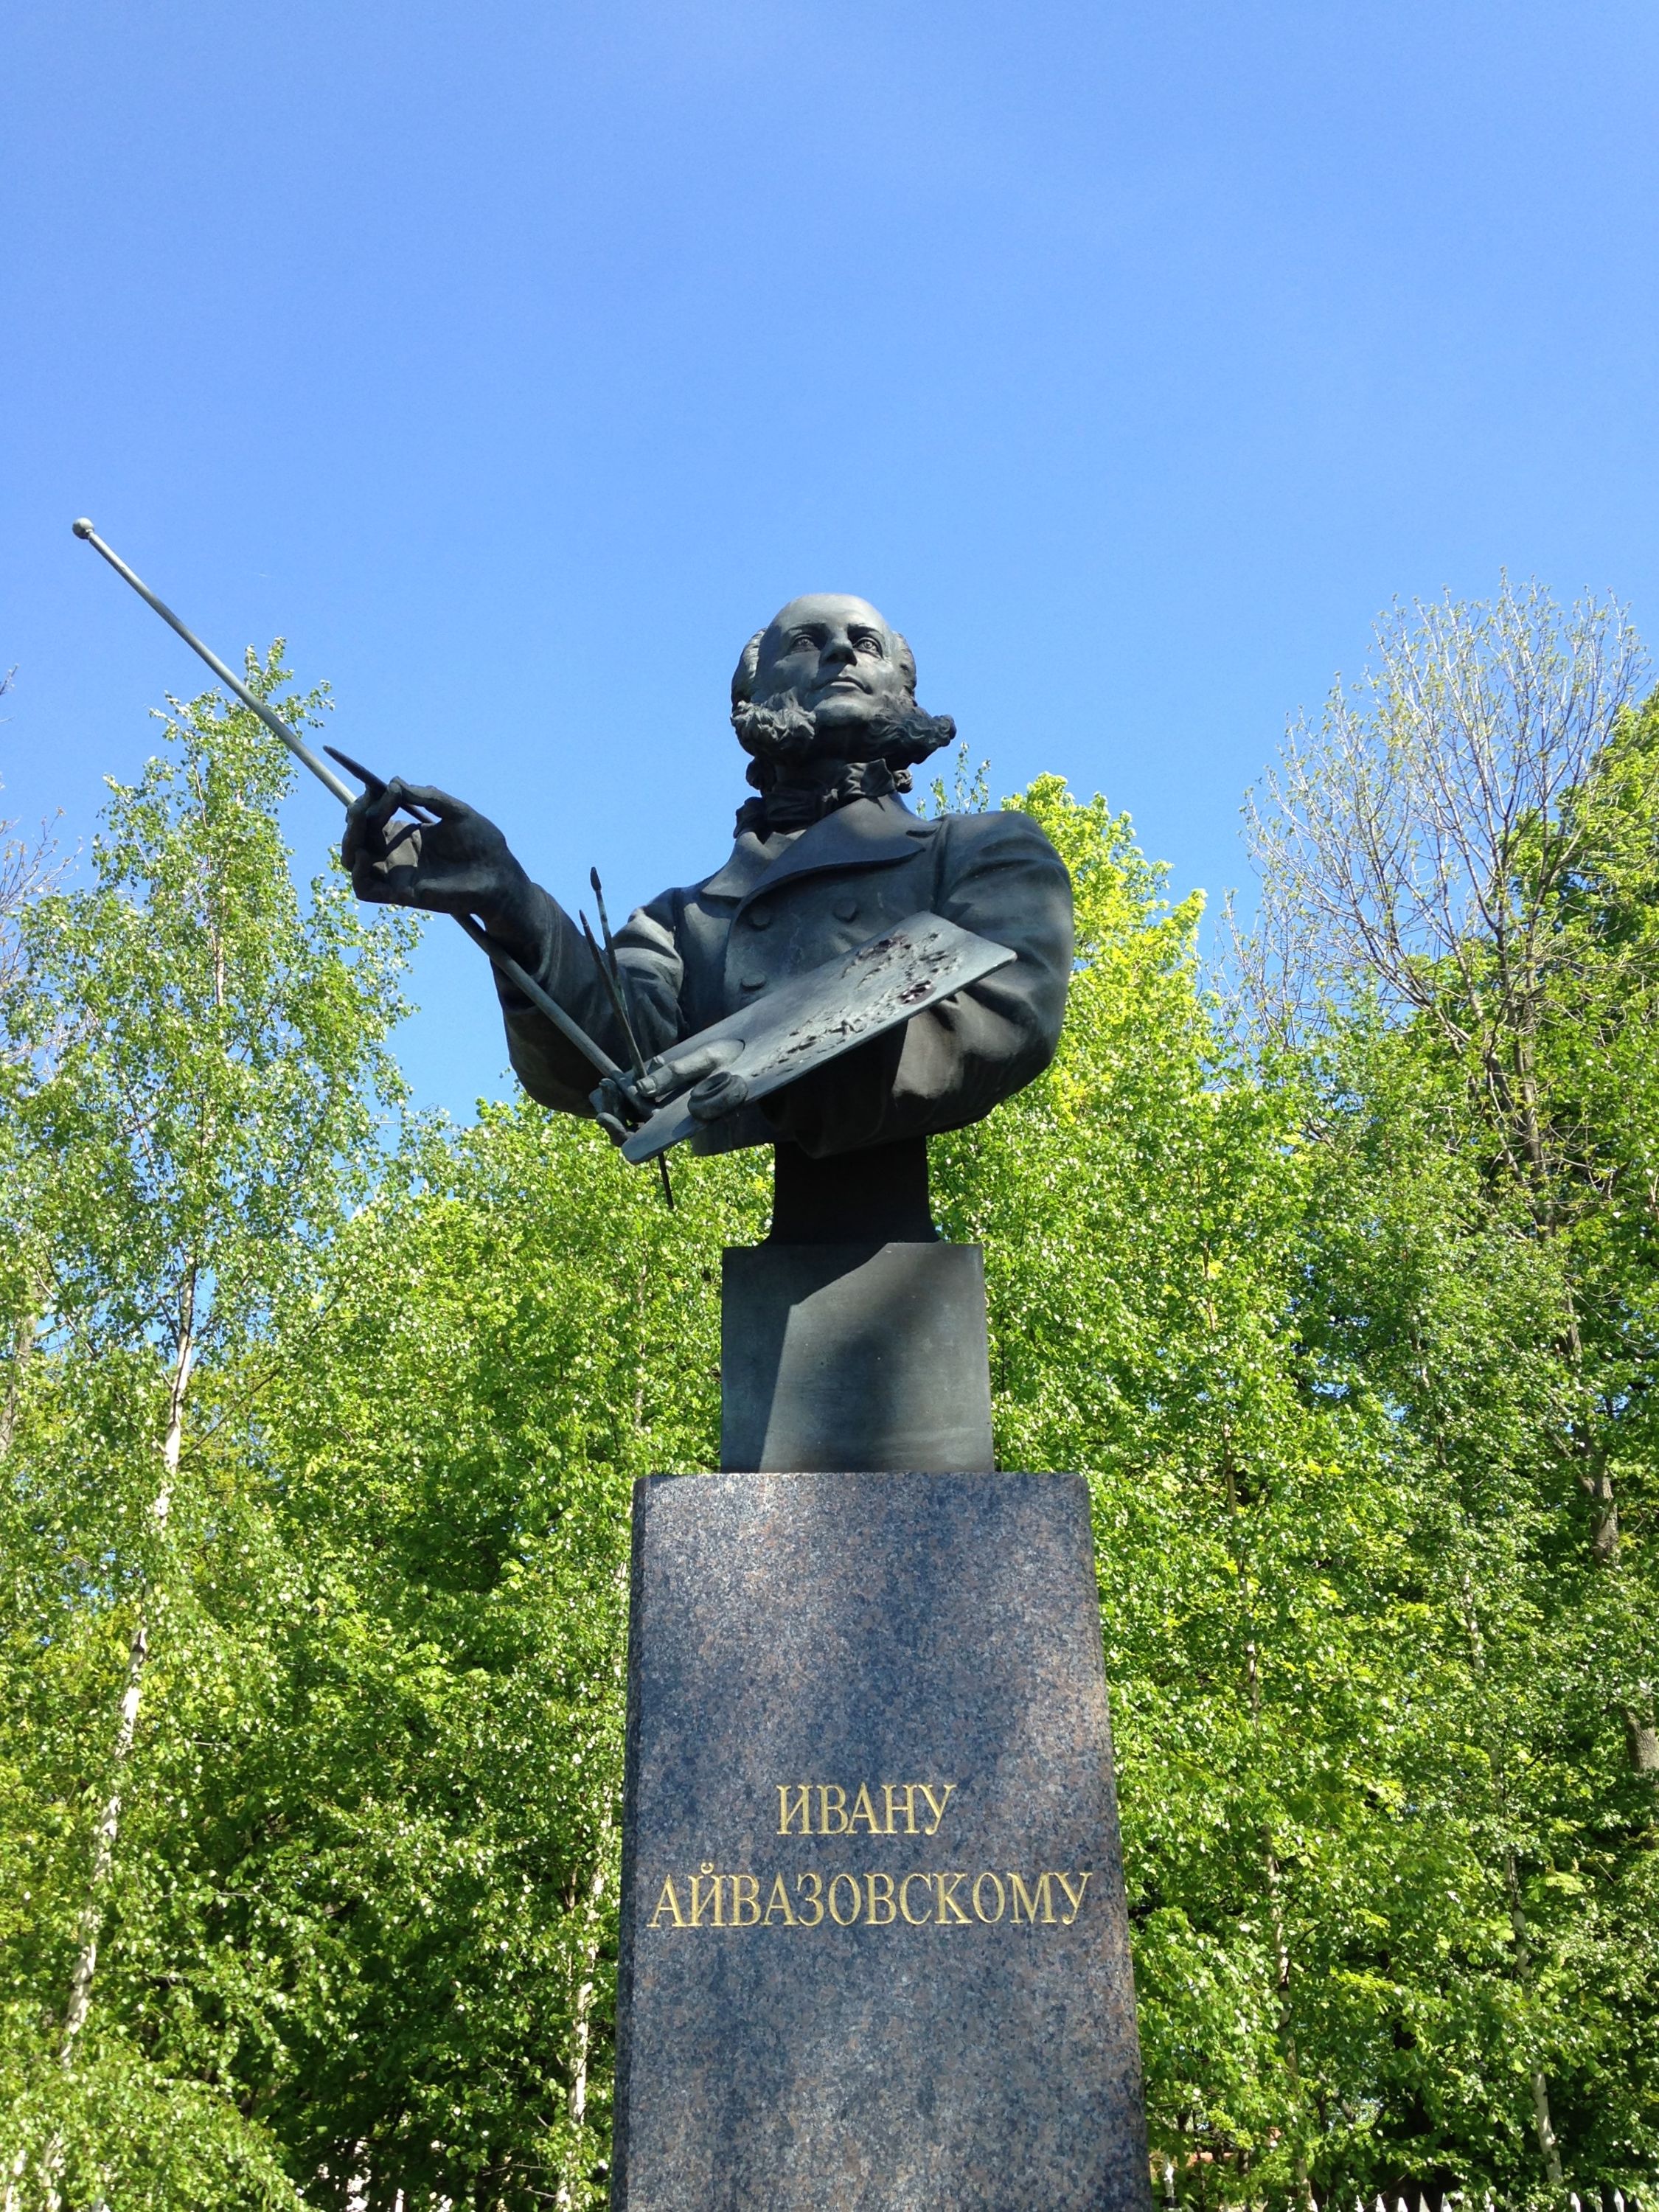 Aivazovsky Statue, Kronstadt